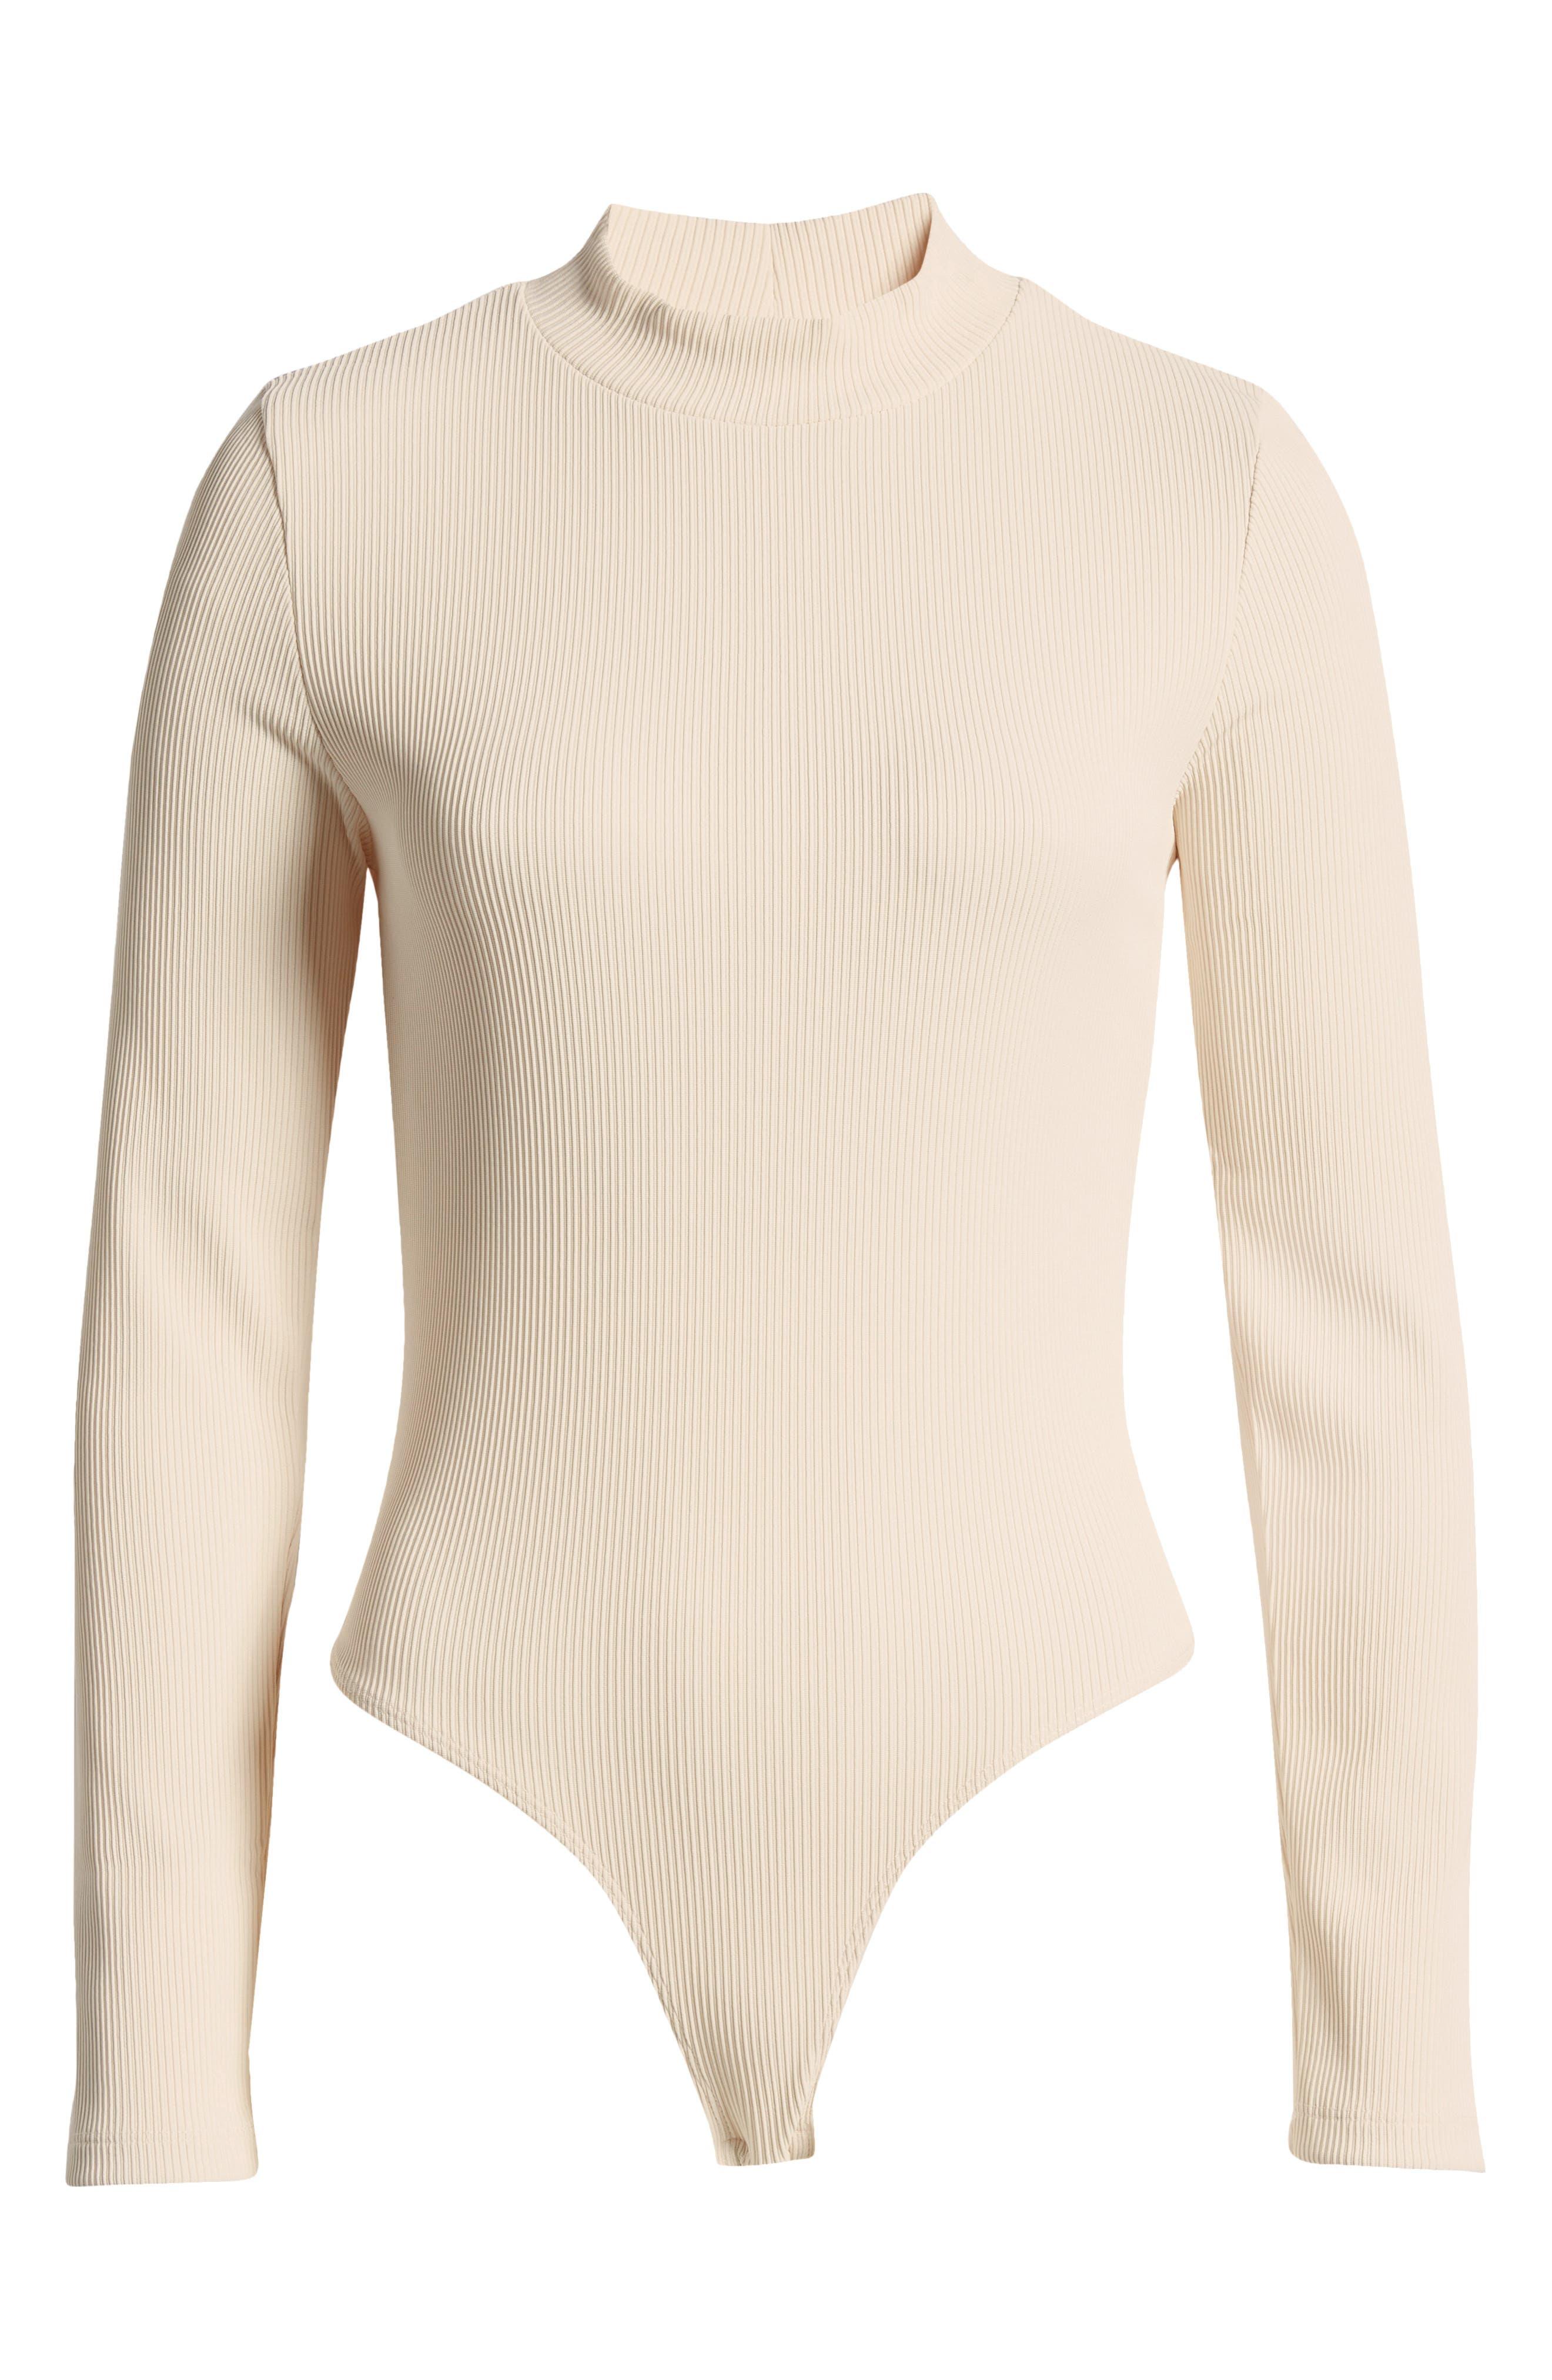 TOPSHOP Long Sleeve Bodysuit In White At Nordstrom Rack | Lyst